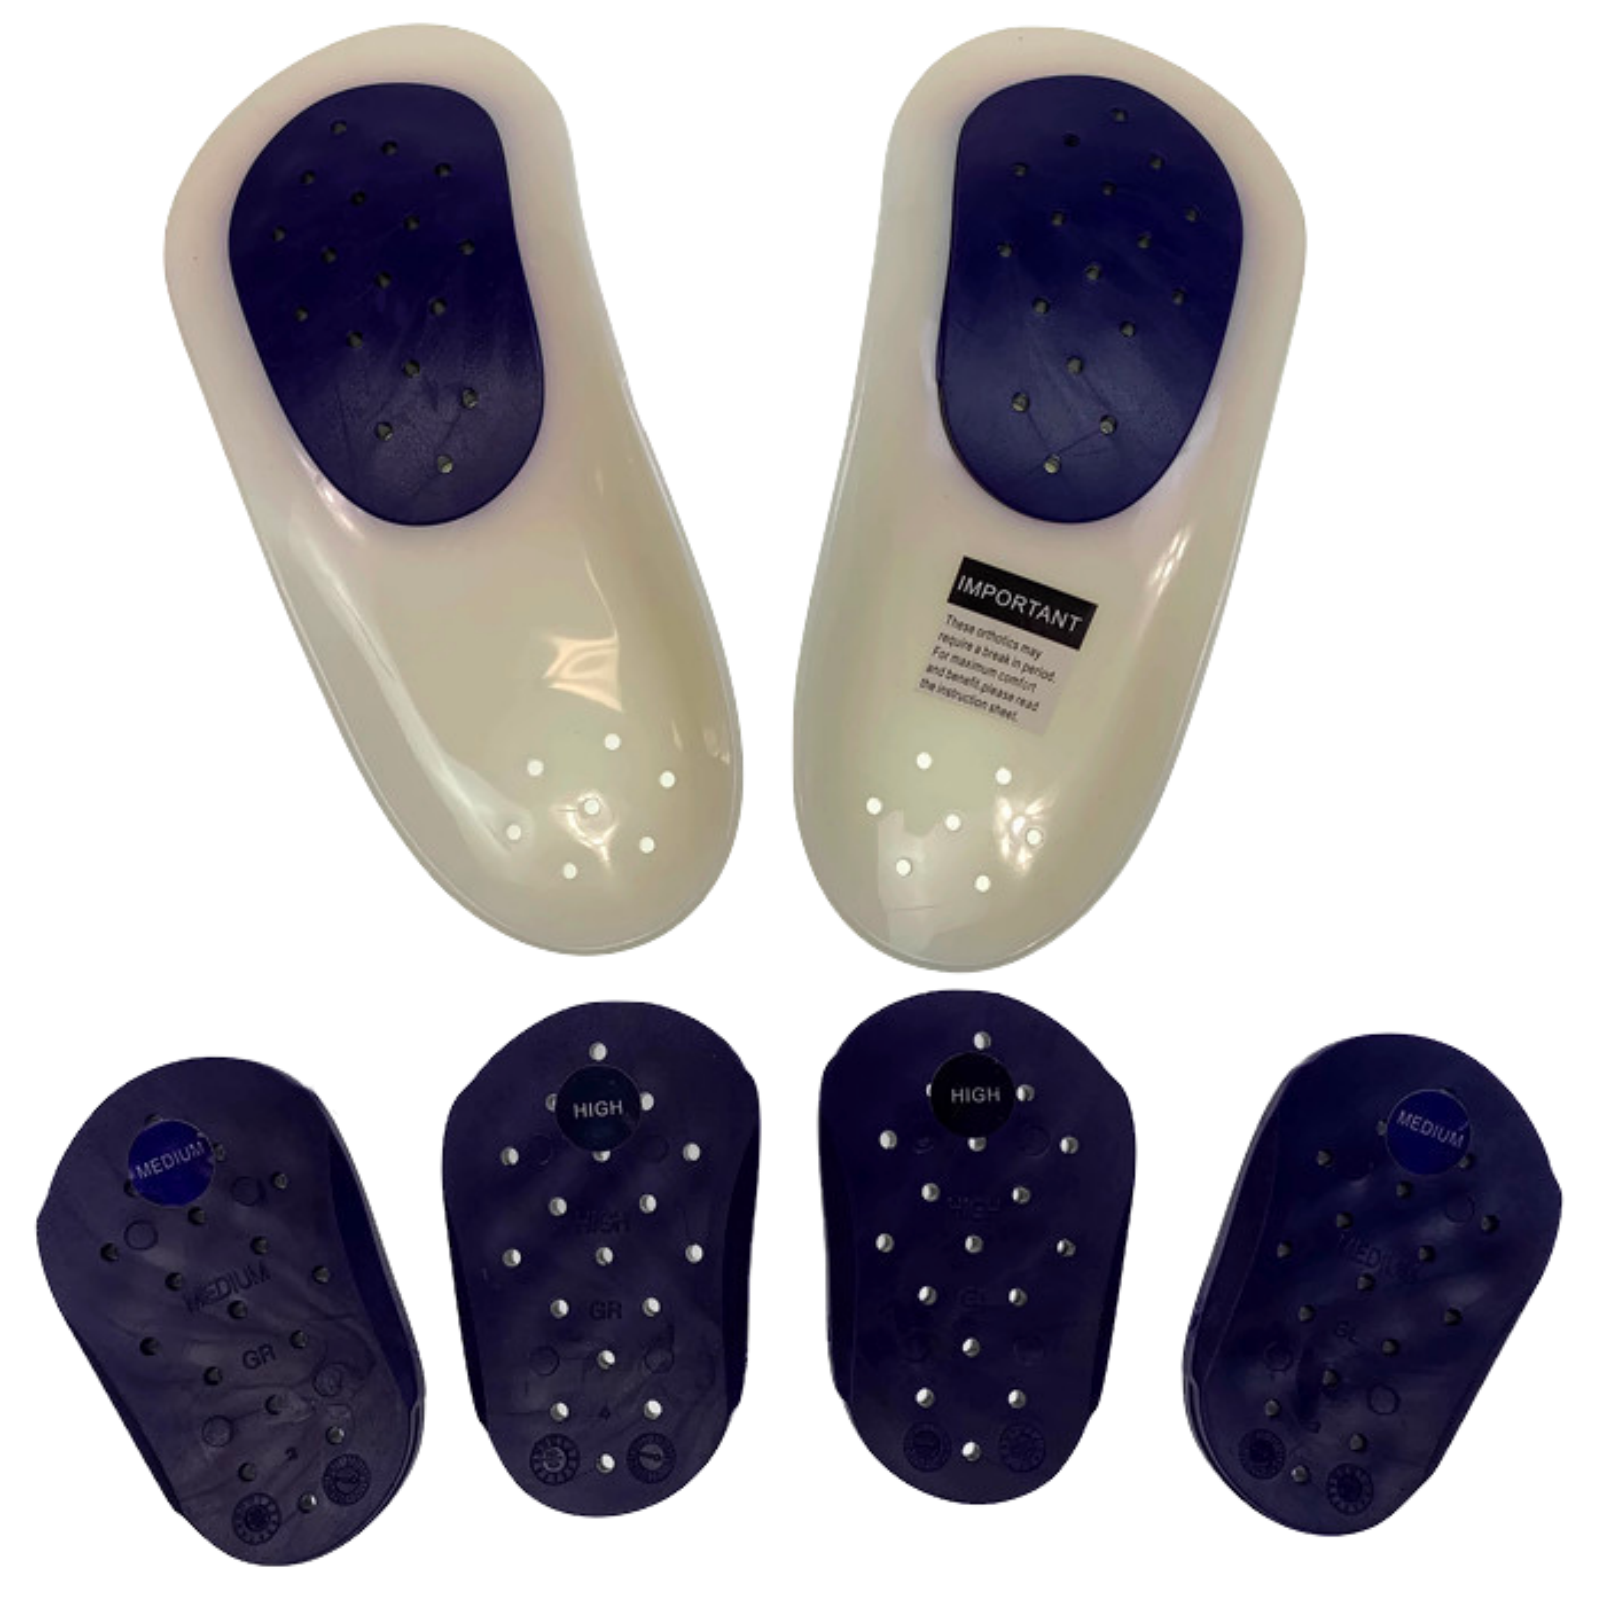 WALKFIT ORTHOTICS Insoles Walk Fit Foot Feet Support BLUE